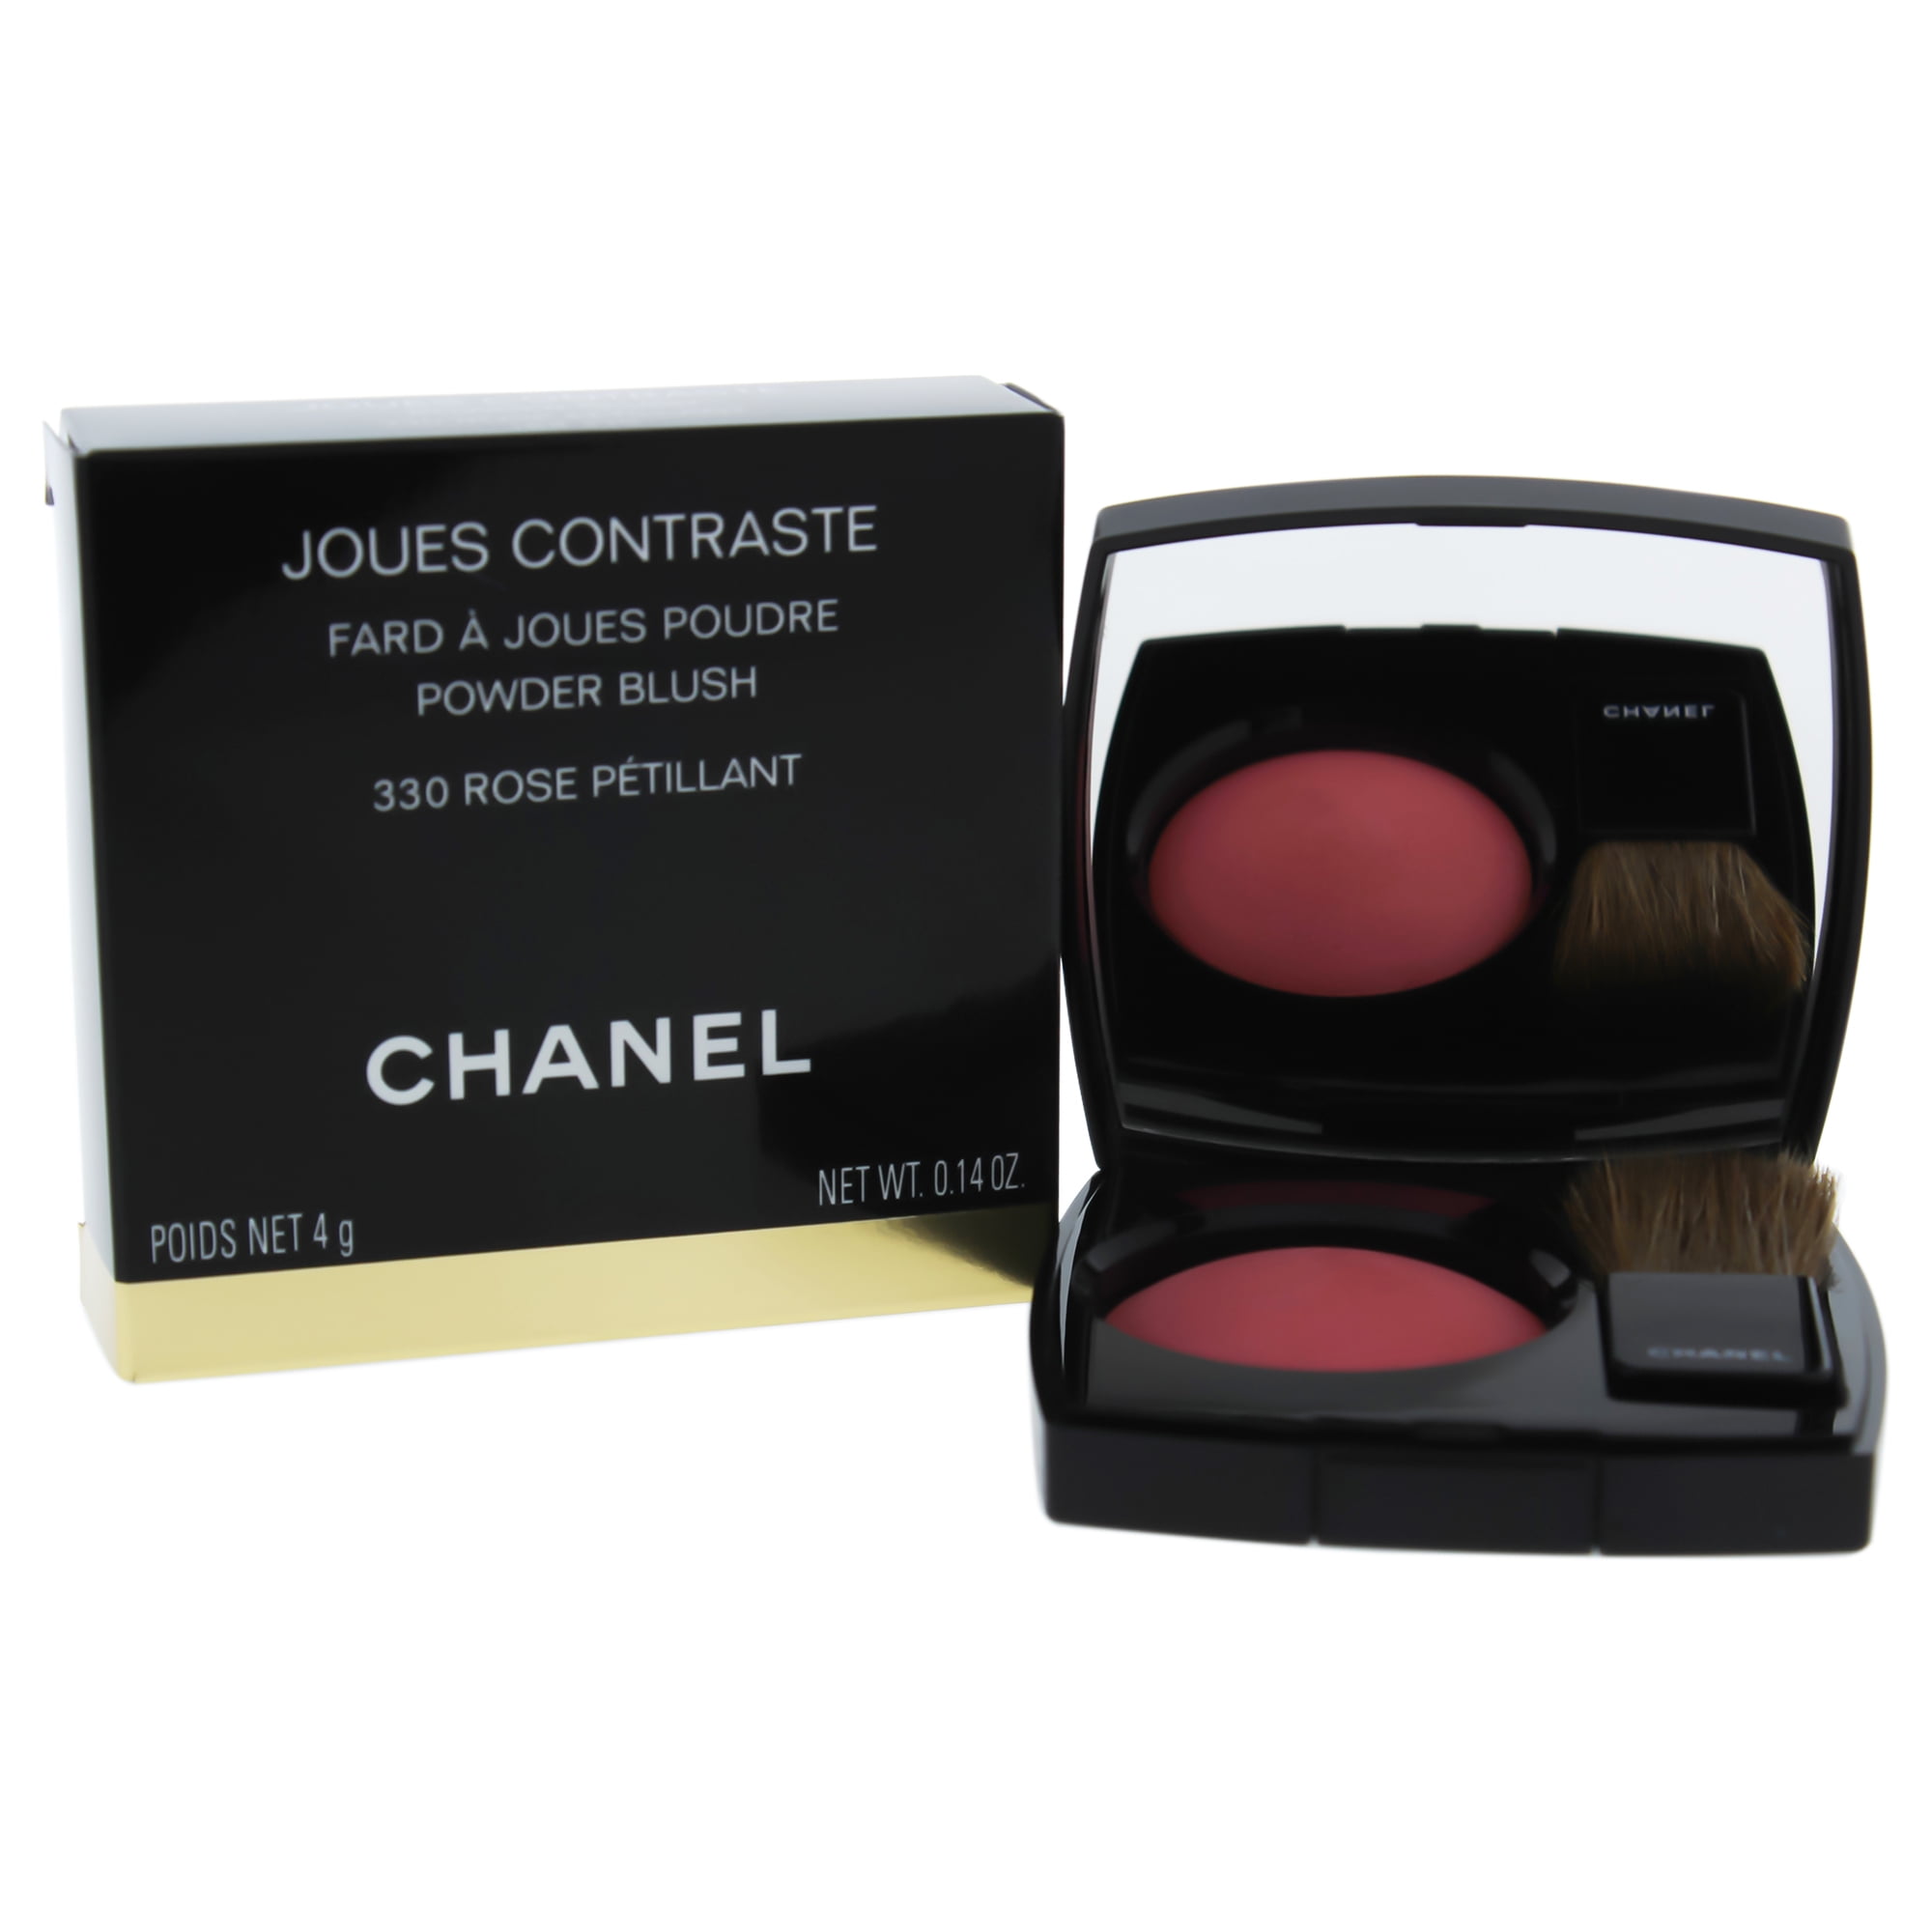 CHANEL - Joues Contraste Powder Blush - 330 Rose Petillant by Chanel ...